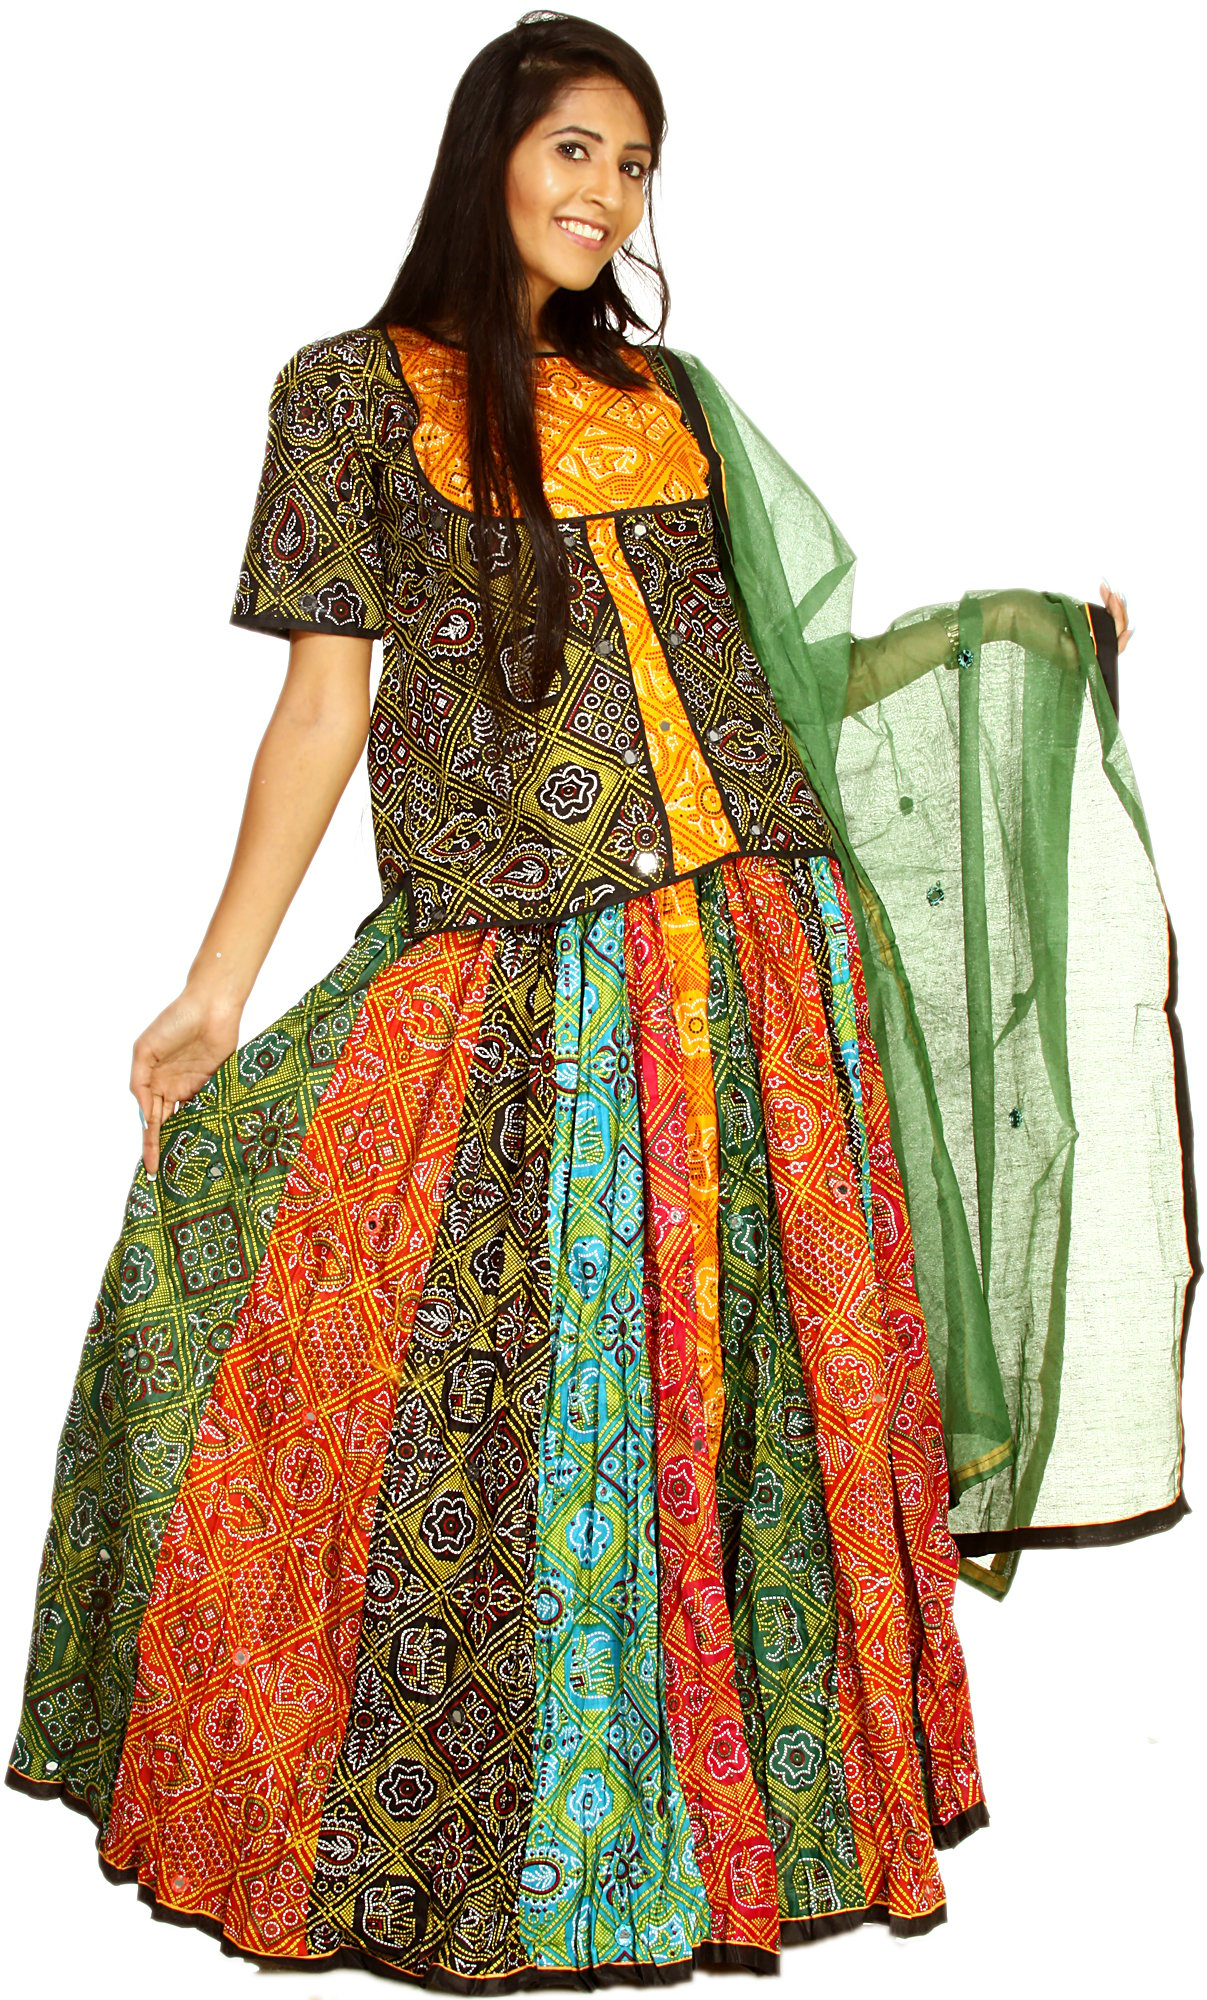 WOMEN RAJASTHANI LEHENGA Choli Designer Dupatta Bollywood Style Blouse  Lehenga $67.99 - PicClick